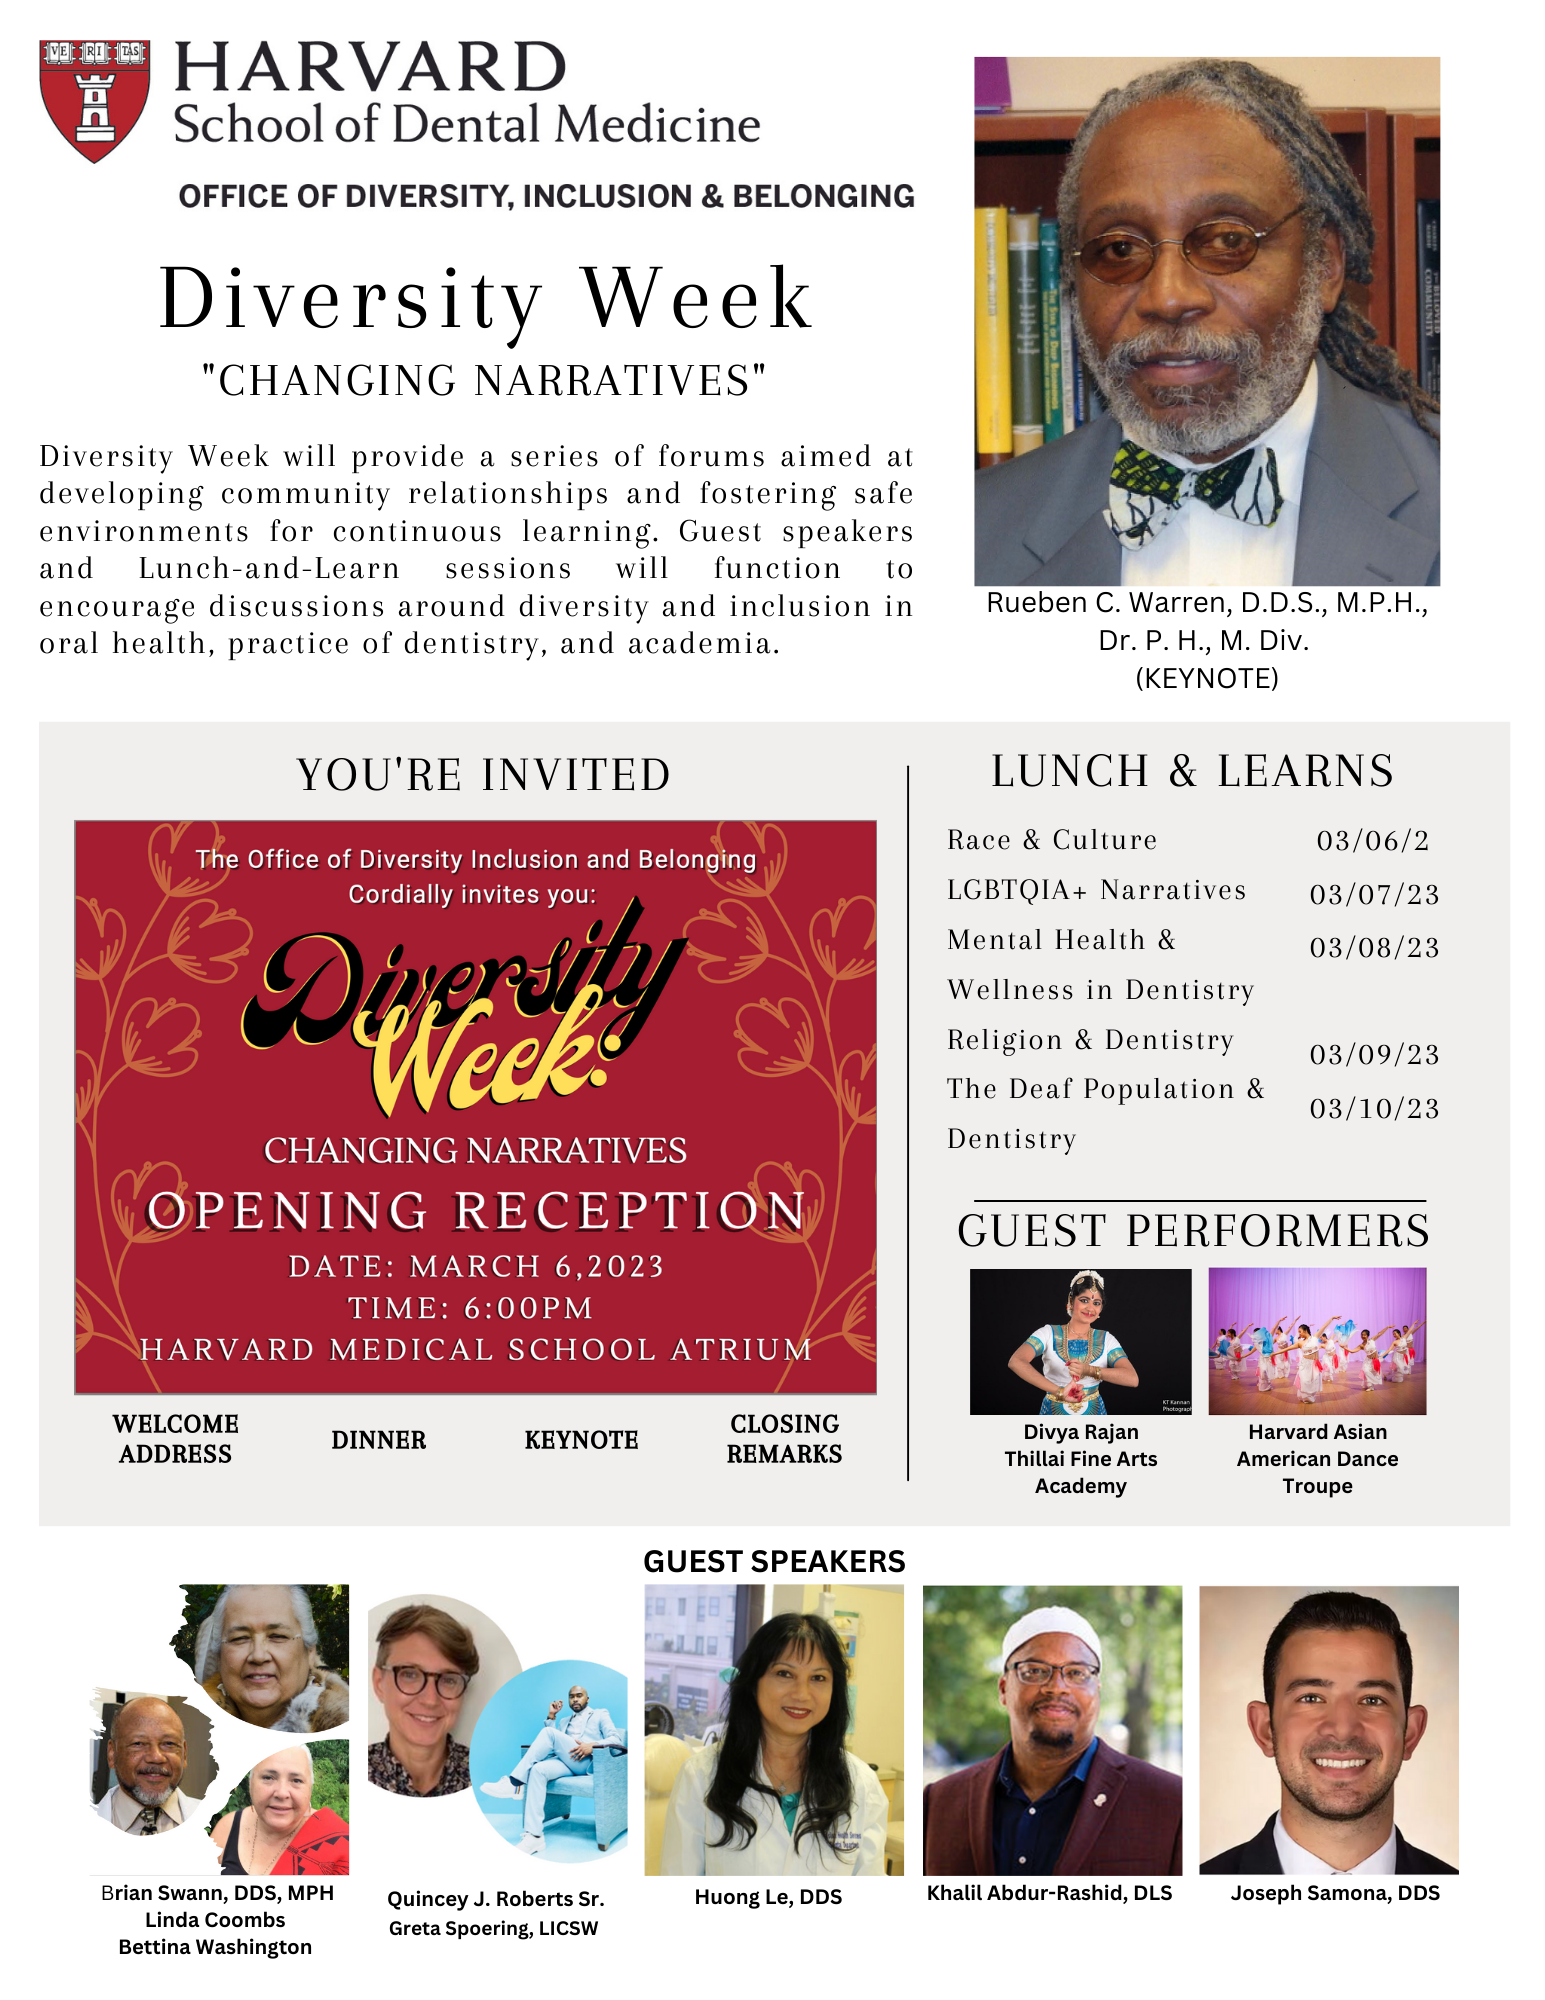 hsdm diversity week